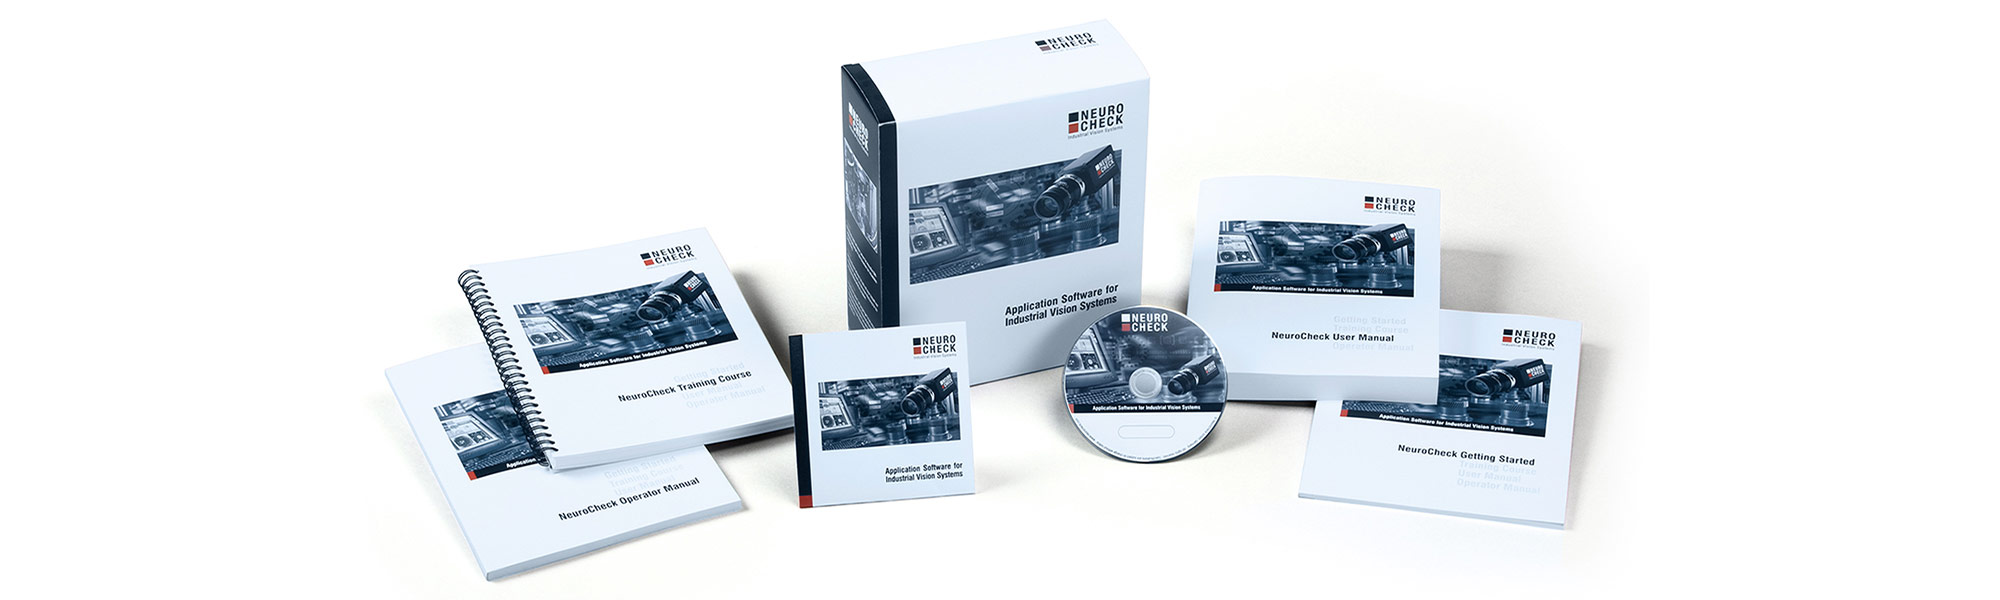 NeuroCheck industrielle Bildverarbeitungssoftware - Industrial Image Processing Software